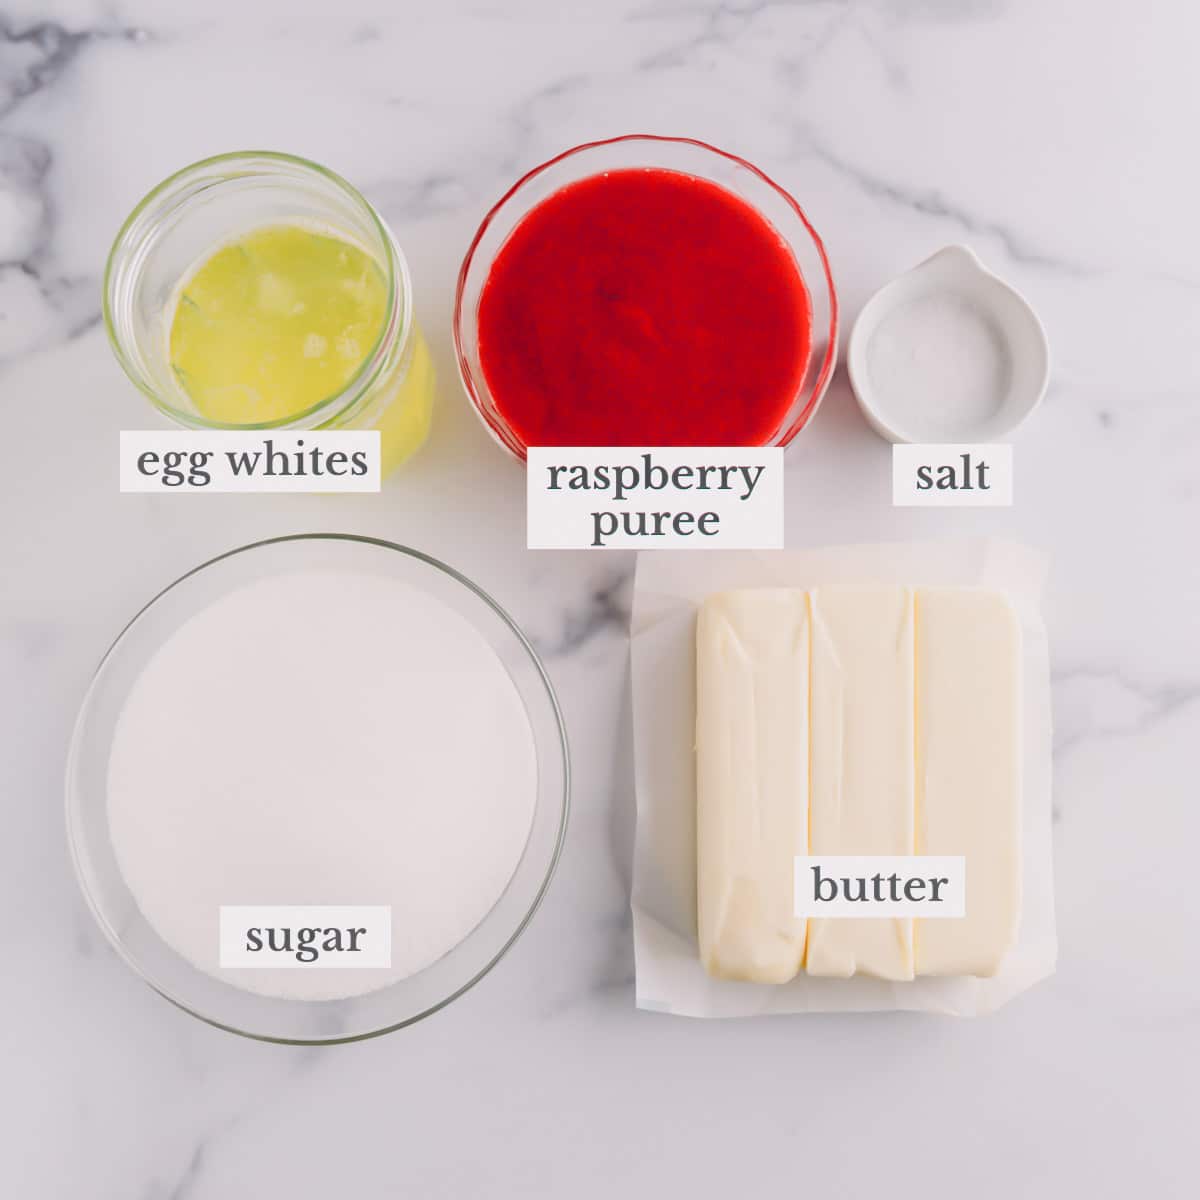 Egg whites, raspberry puree, salt, butter, and sugar to make raspberry Swiss buttercream.